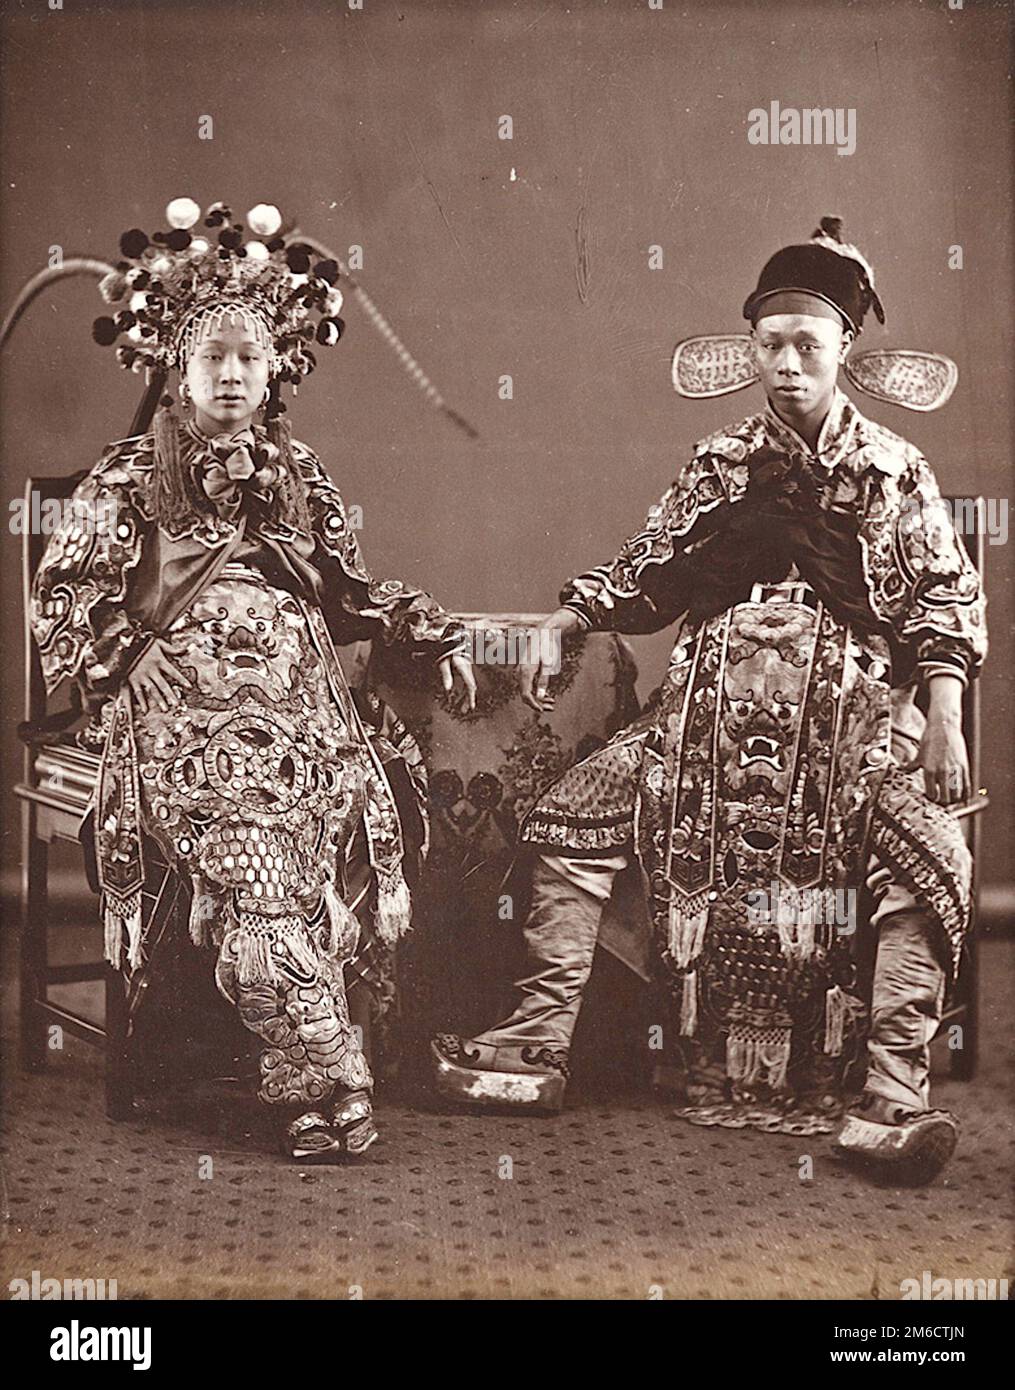 Lai Apong - Performers Cinesi - Performers Cinesi. 1870's - musicisti cinesi in costumi teatrali. Foto Stock